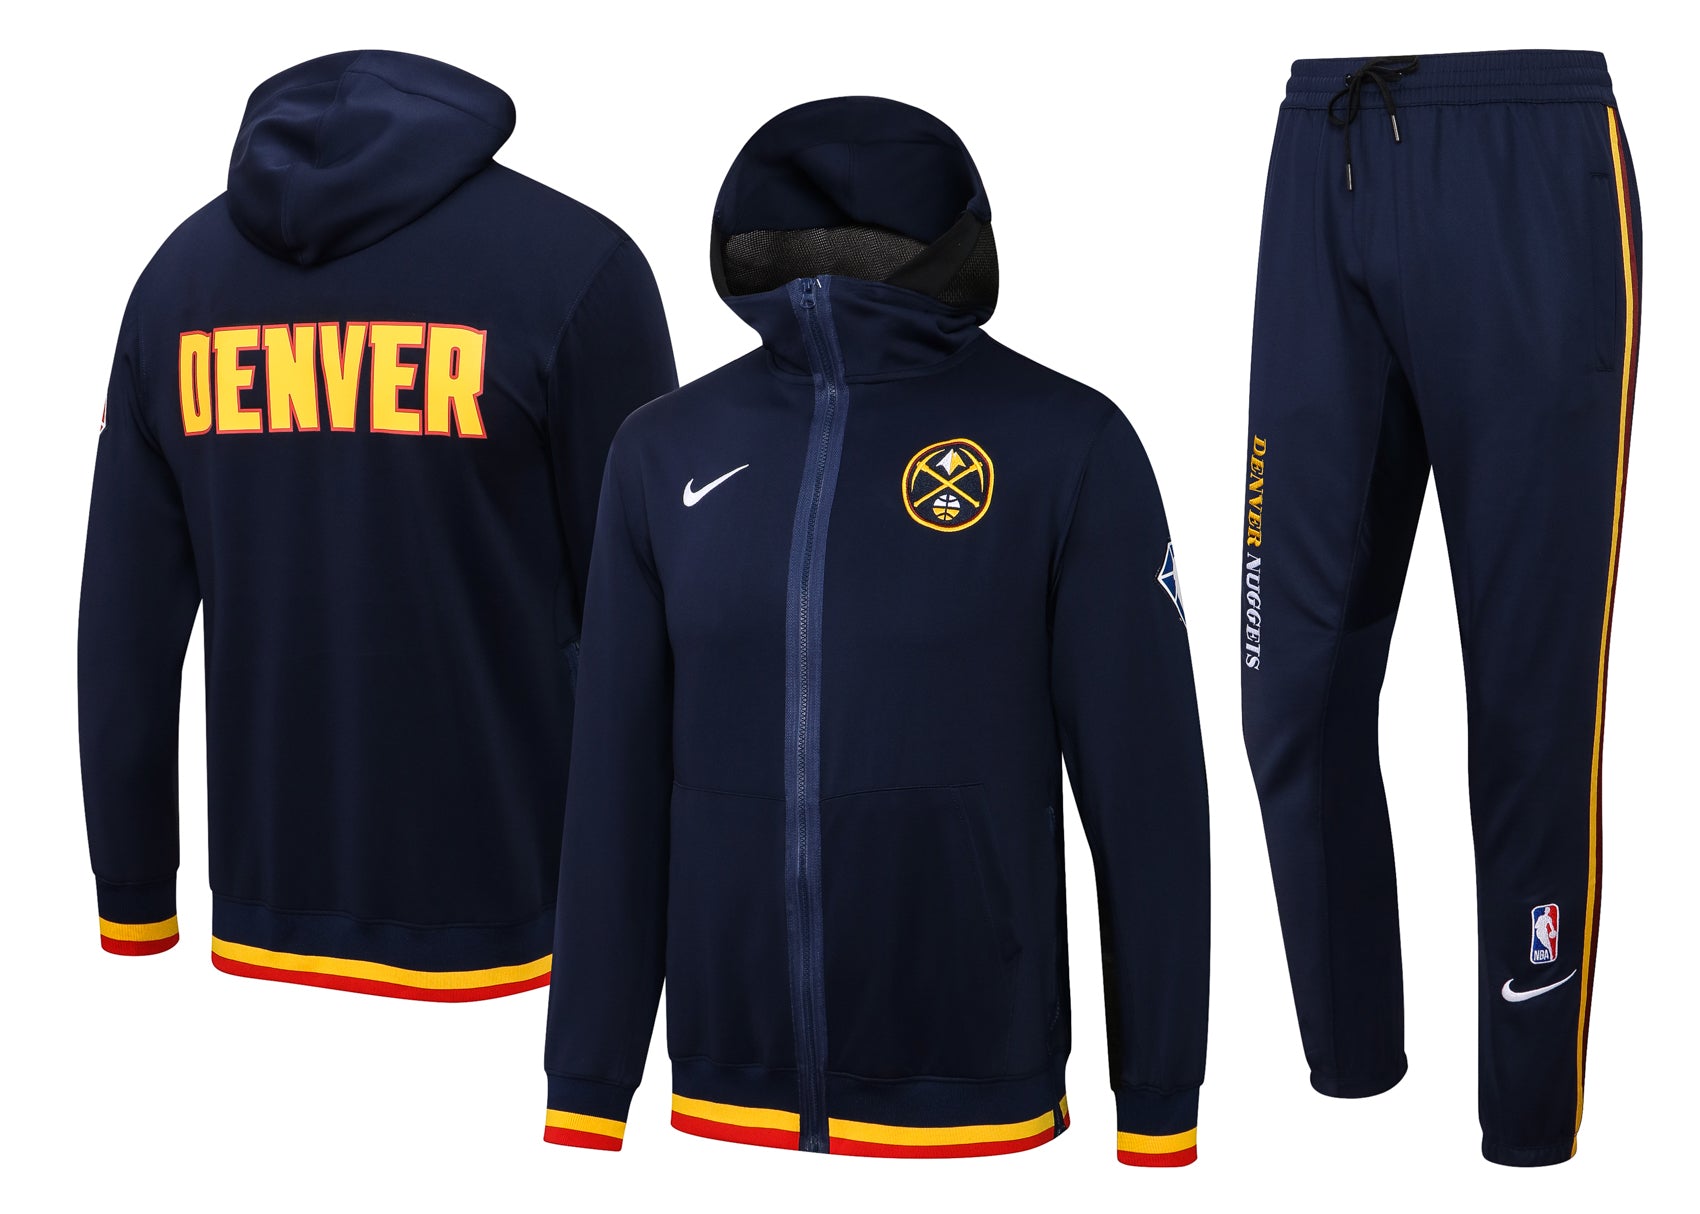 Denver nuggets navy blue suit